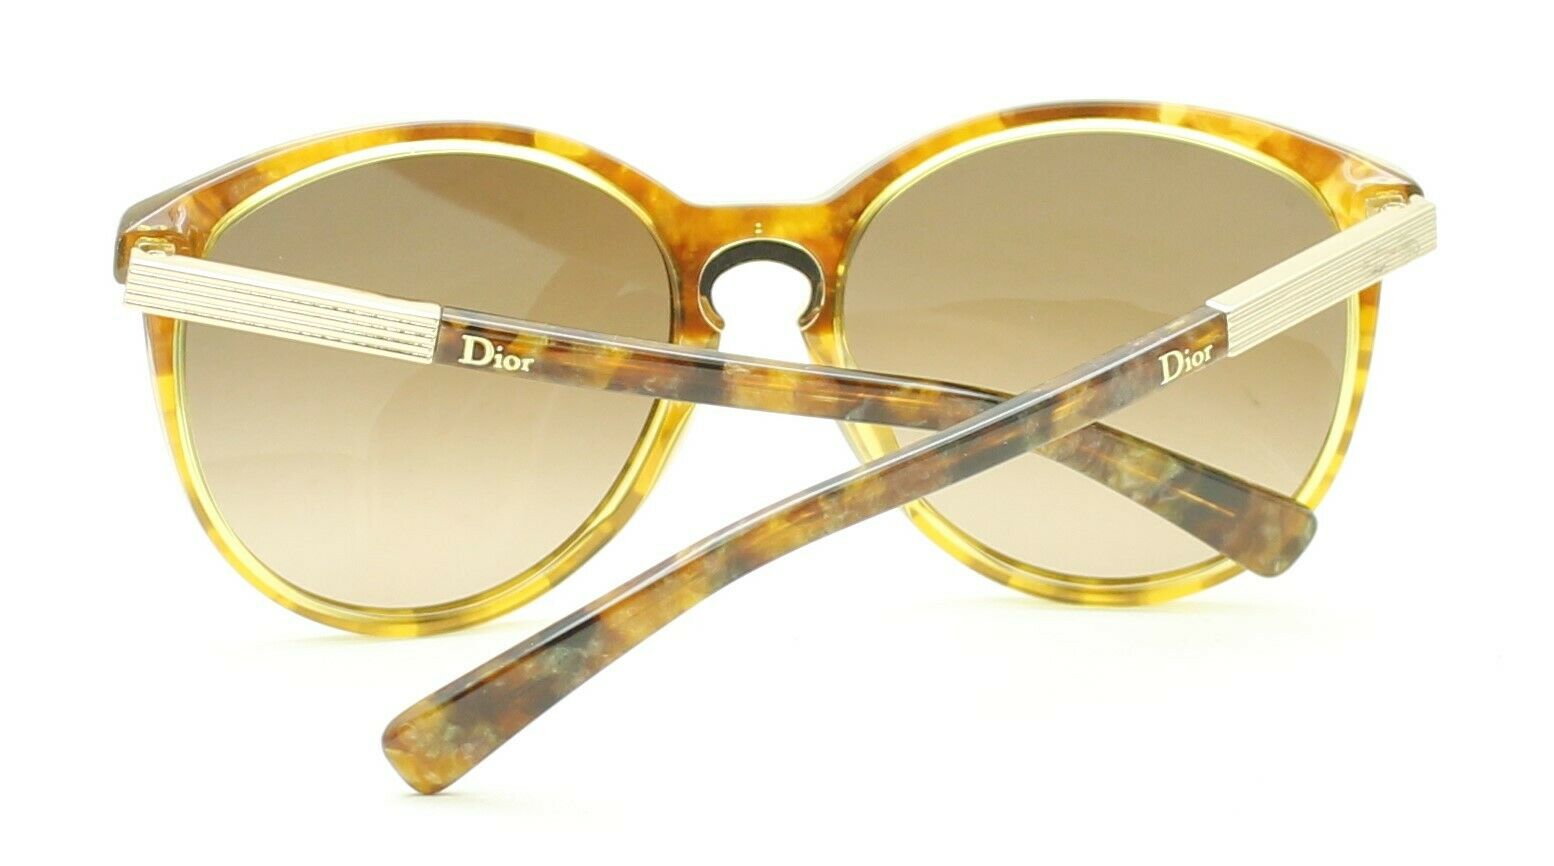 CHRISTIAN DIOR ENTRACTE 1 FS XTCD8 57mm  Sunglasses Shades New BNIB - ITALY